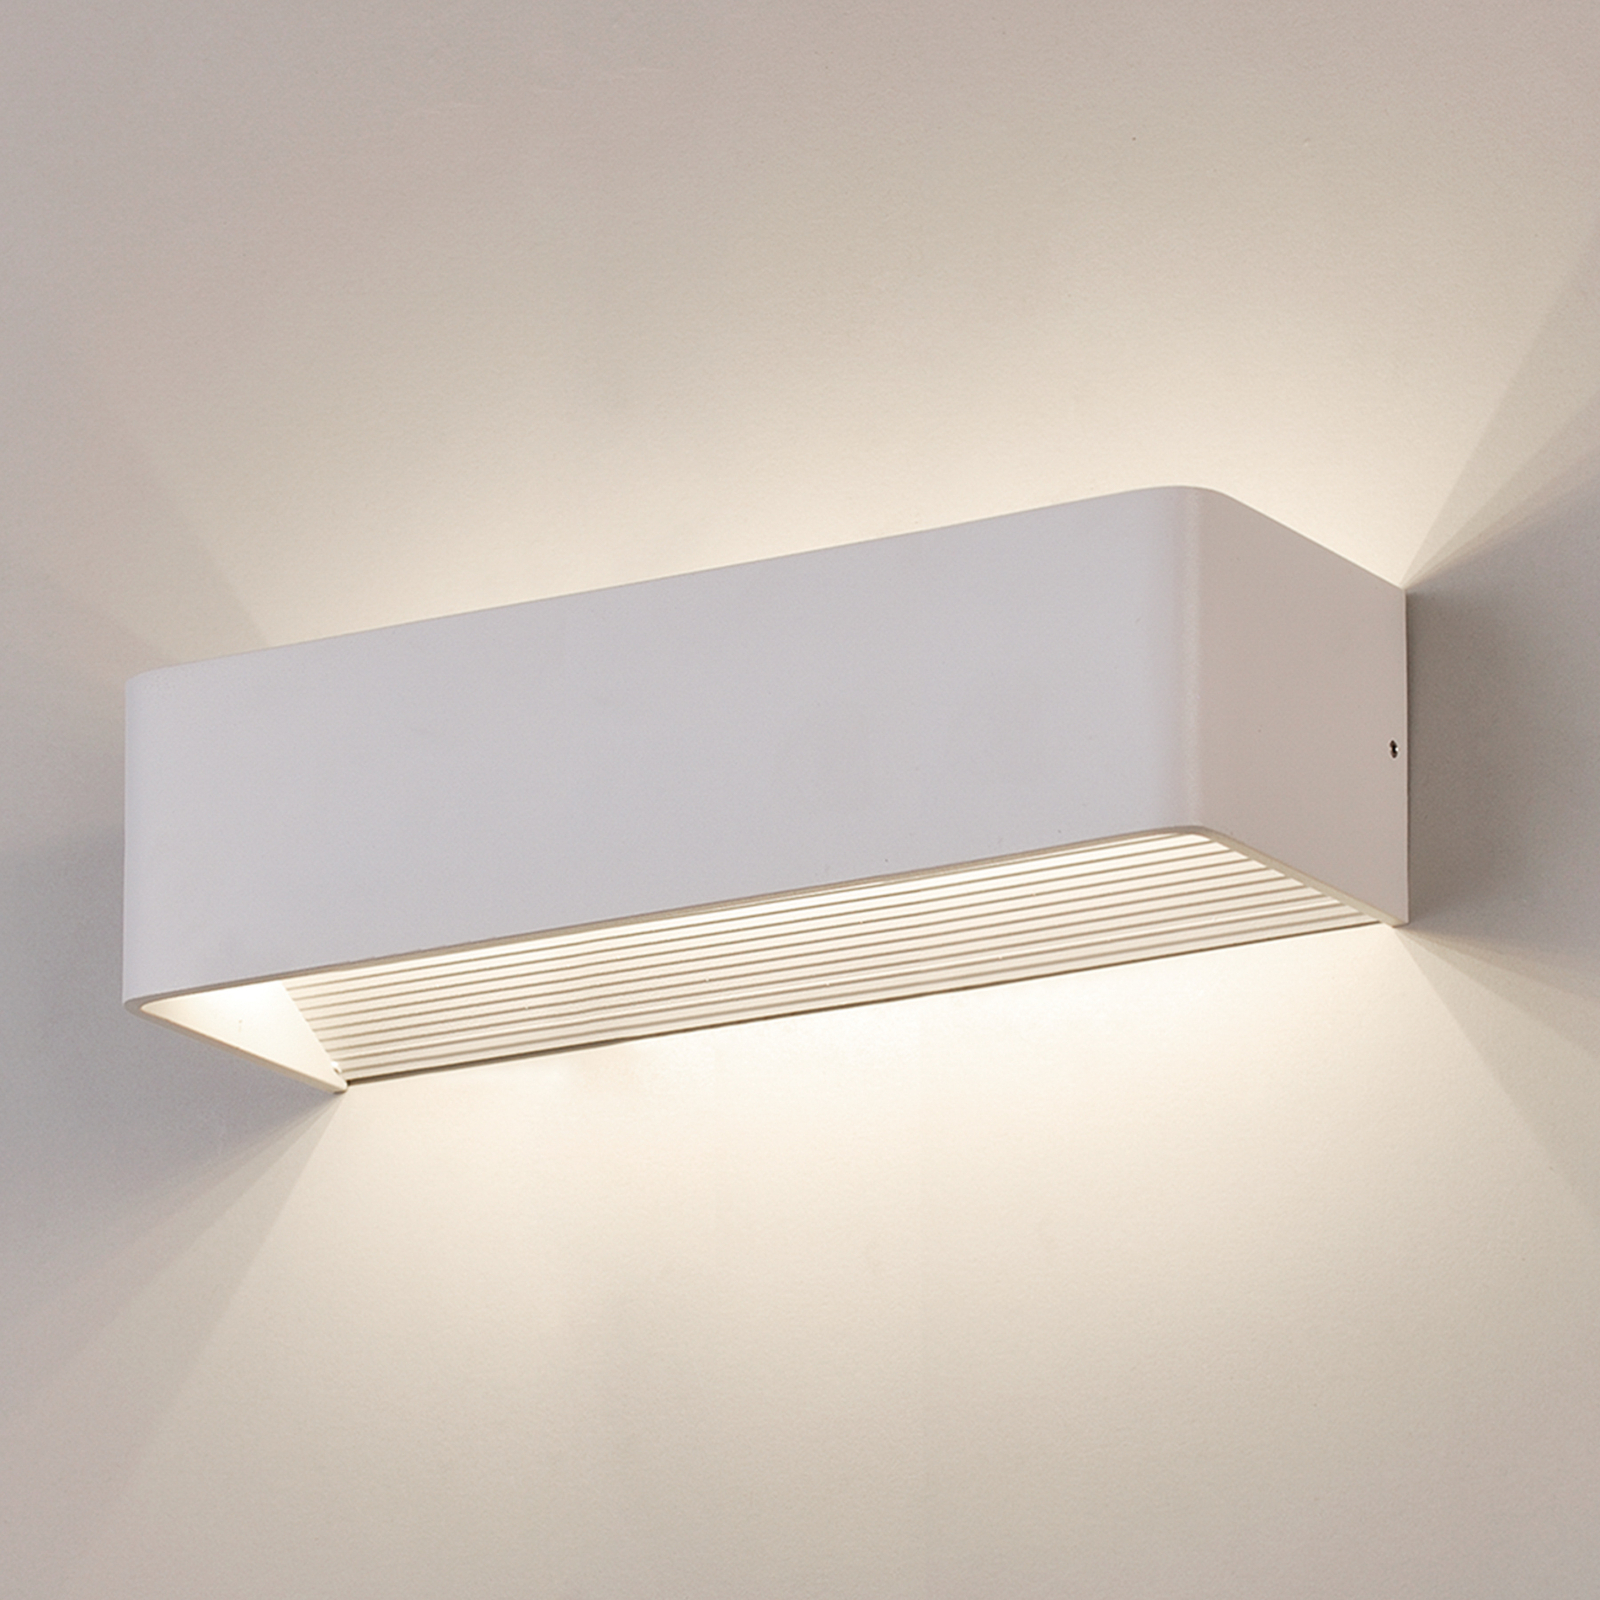 Icon LED-vägglampa, vit, upp/ned, bredd 37 cm